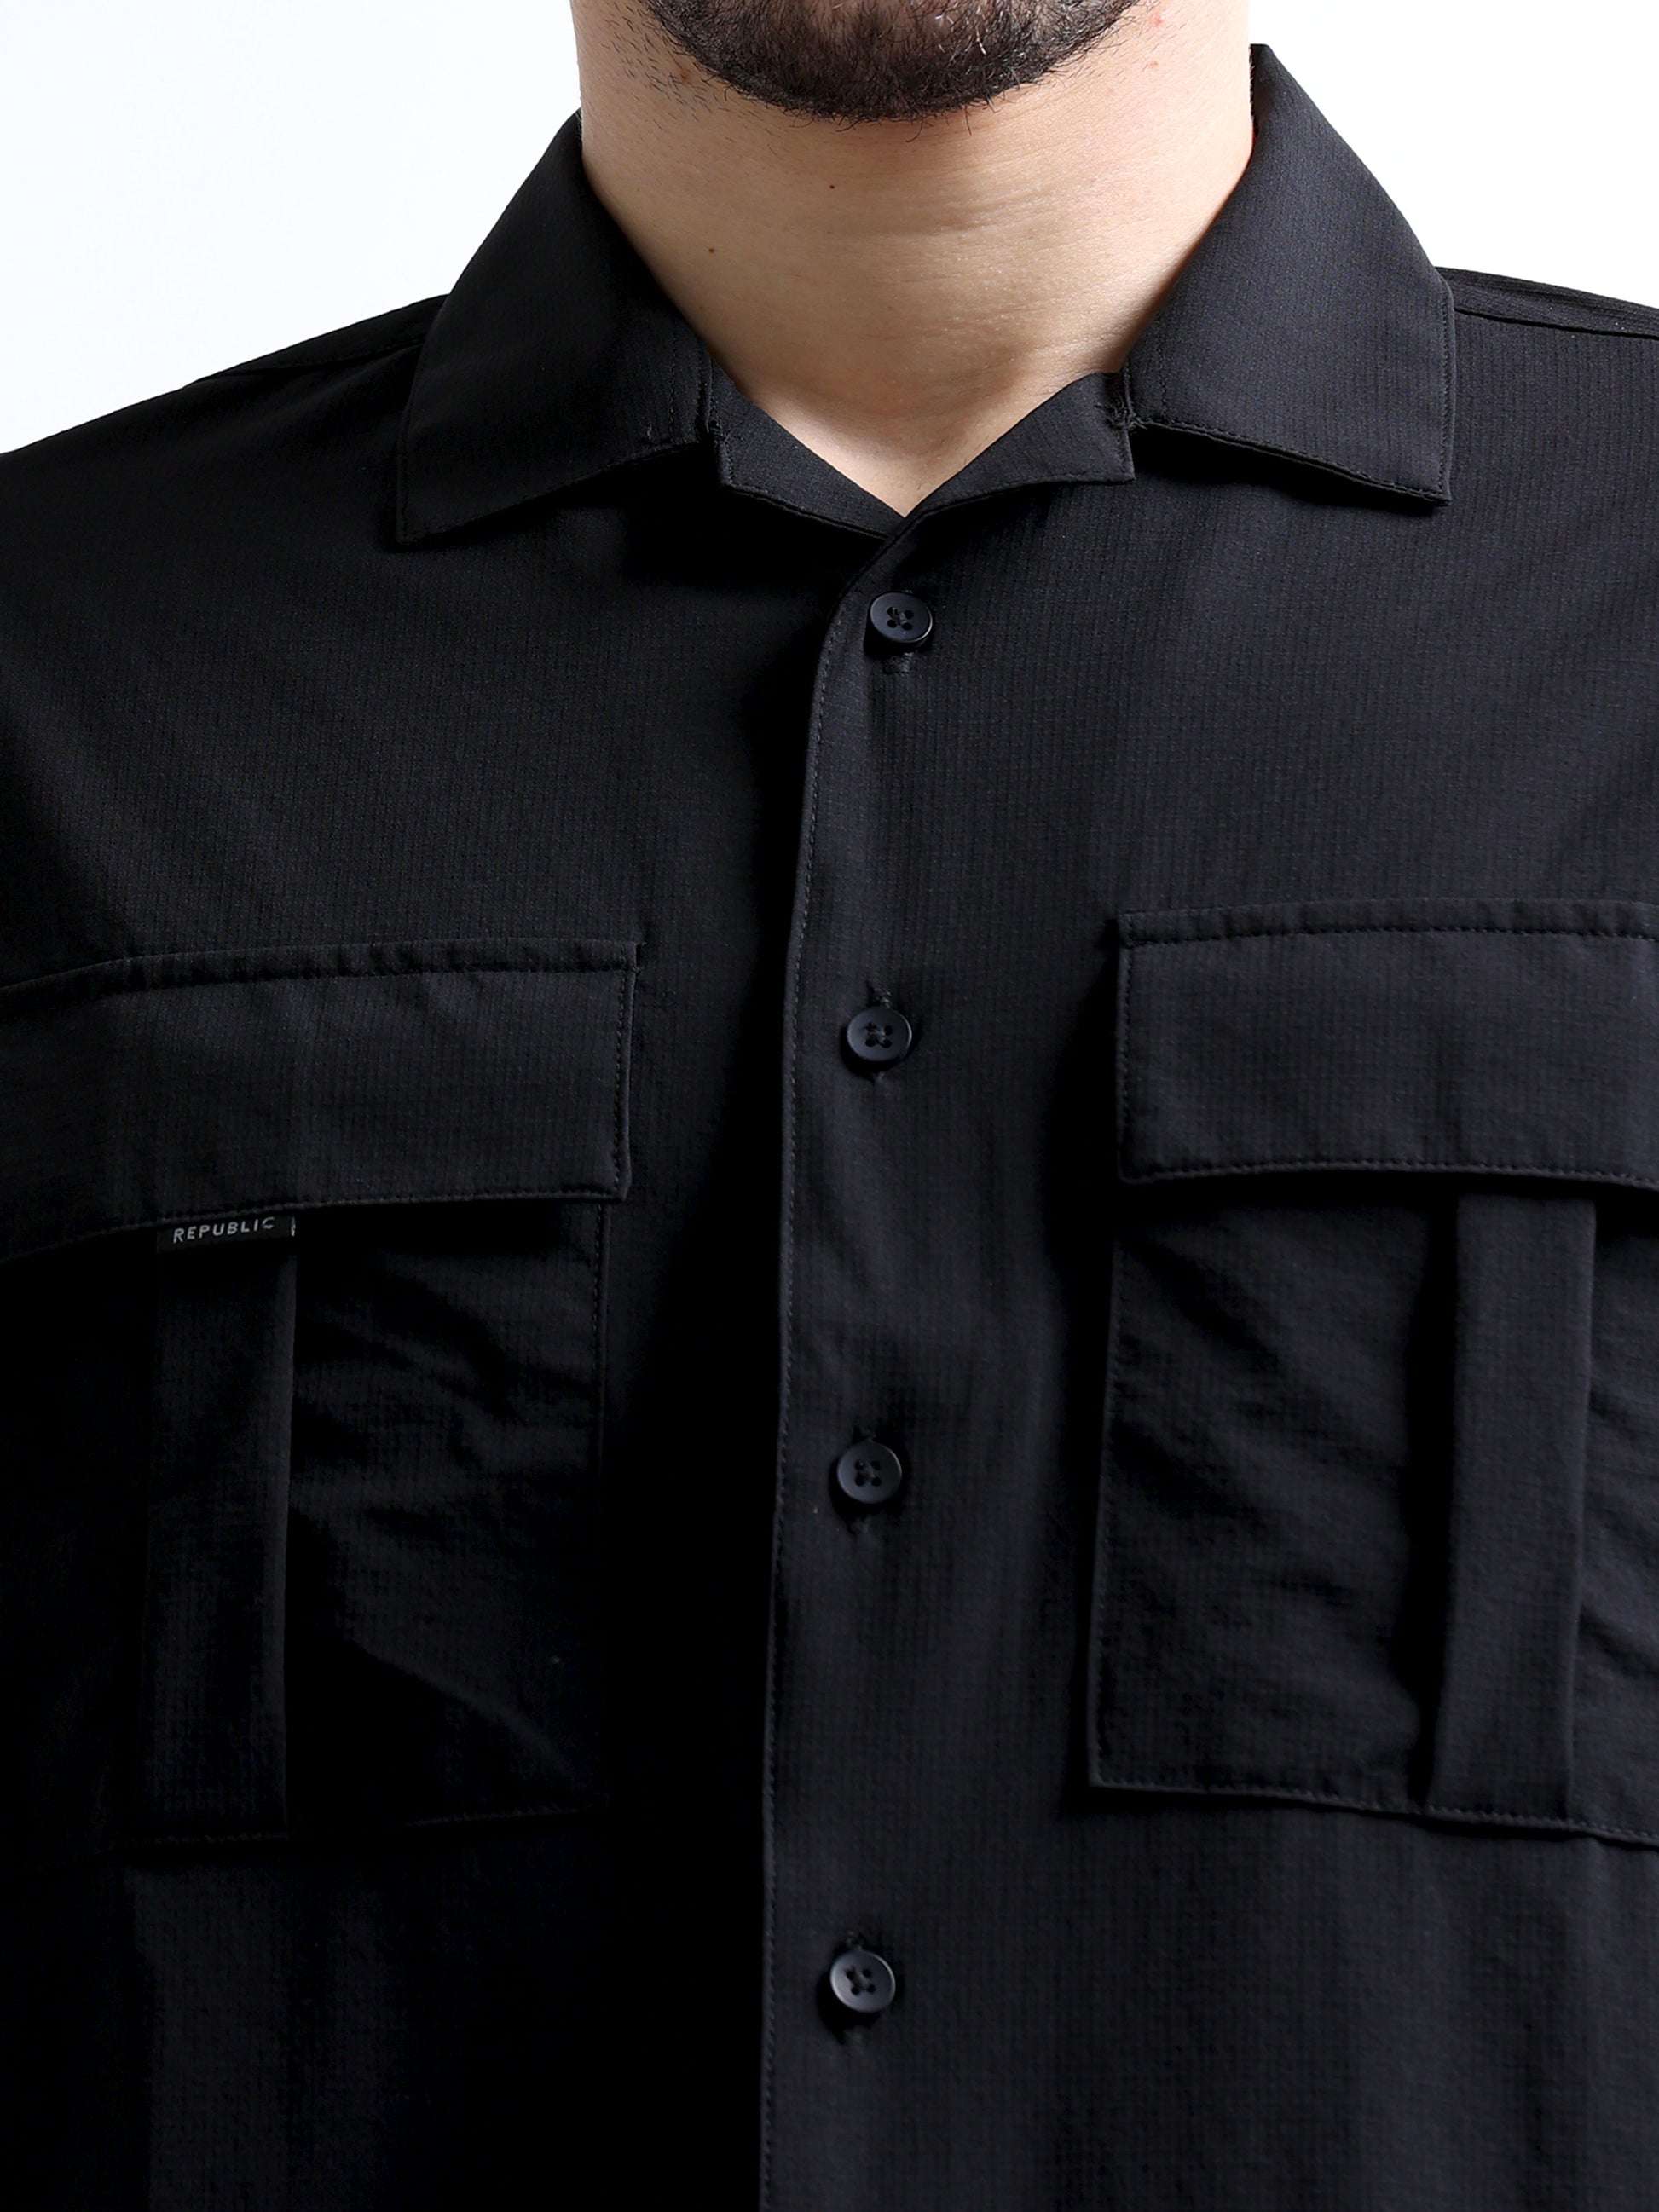 Black Men's Cuban Collar Cargo Double Pocket Plain Shirt